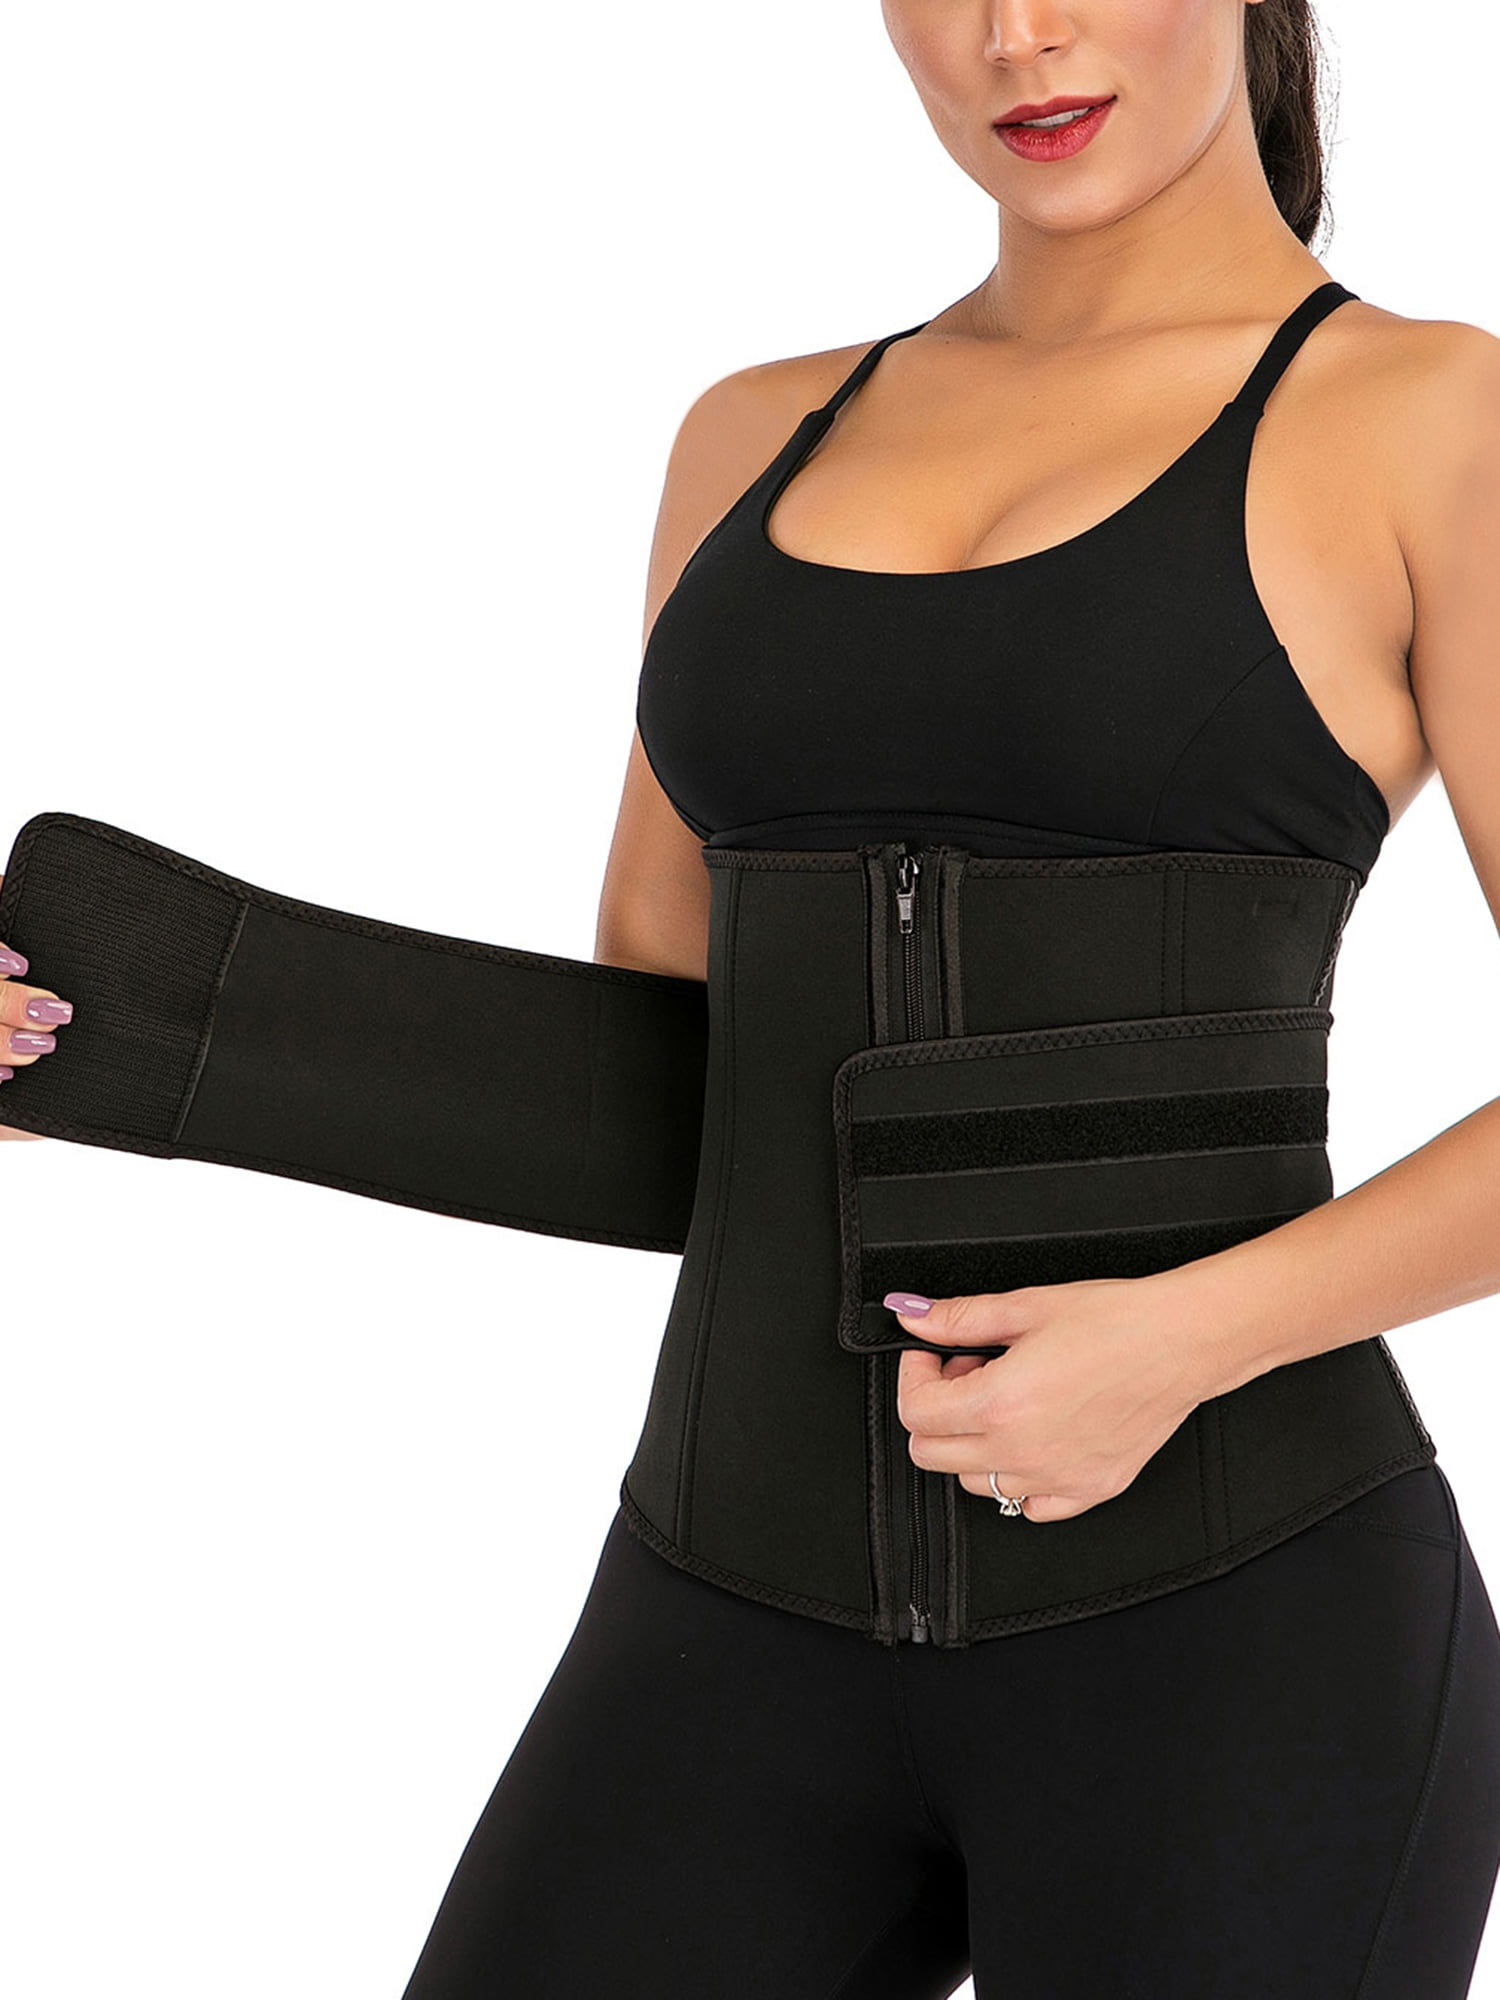 Details about   Women Waist Trainer Belt Sweat Body Shaper Girdle Slimmer Tummy Control Belt USA 